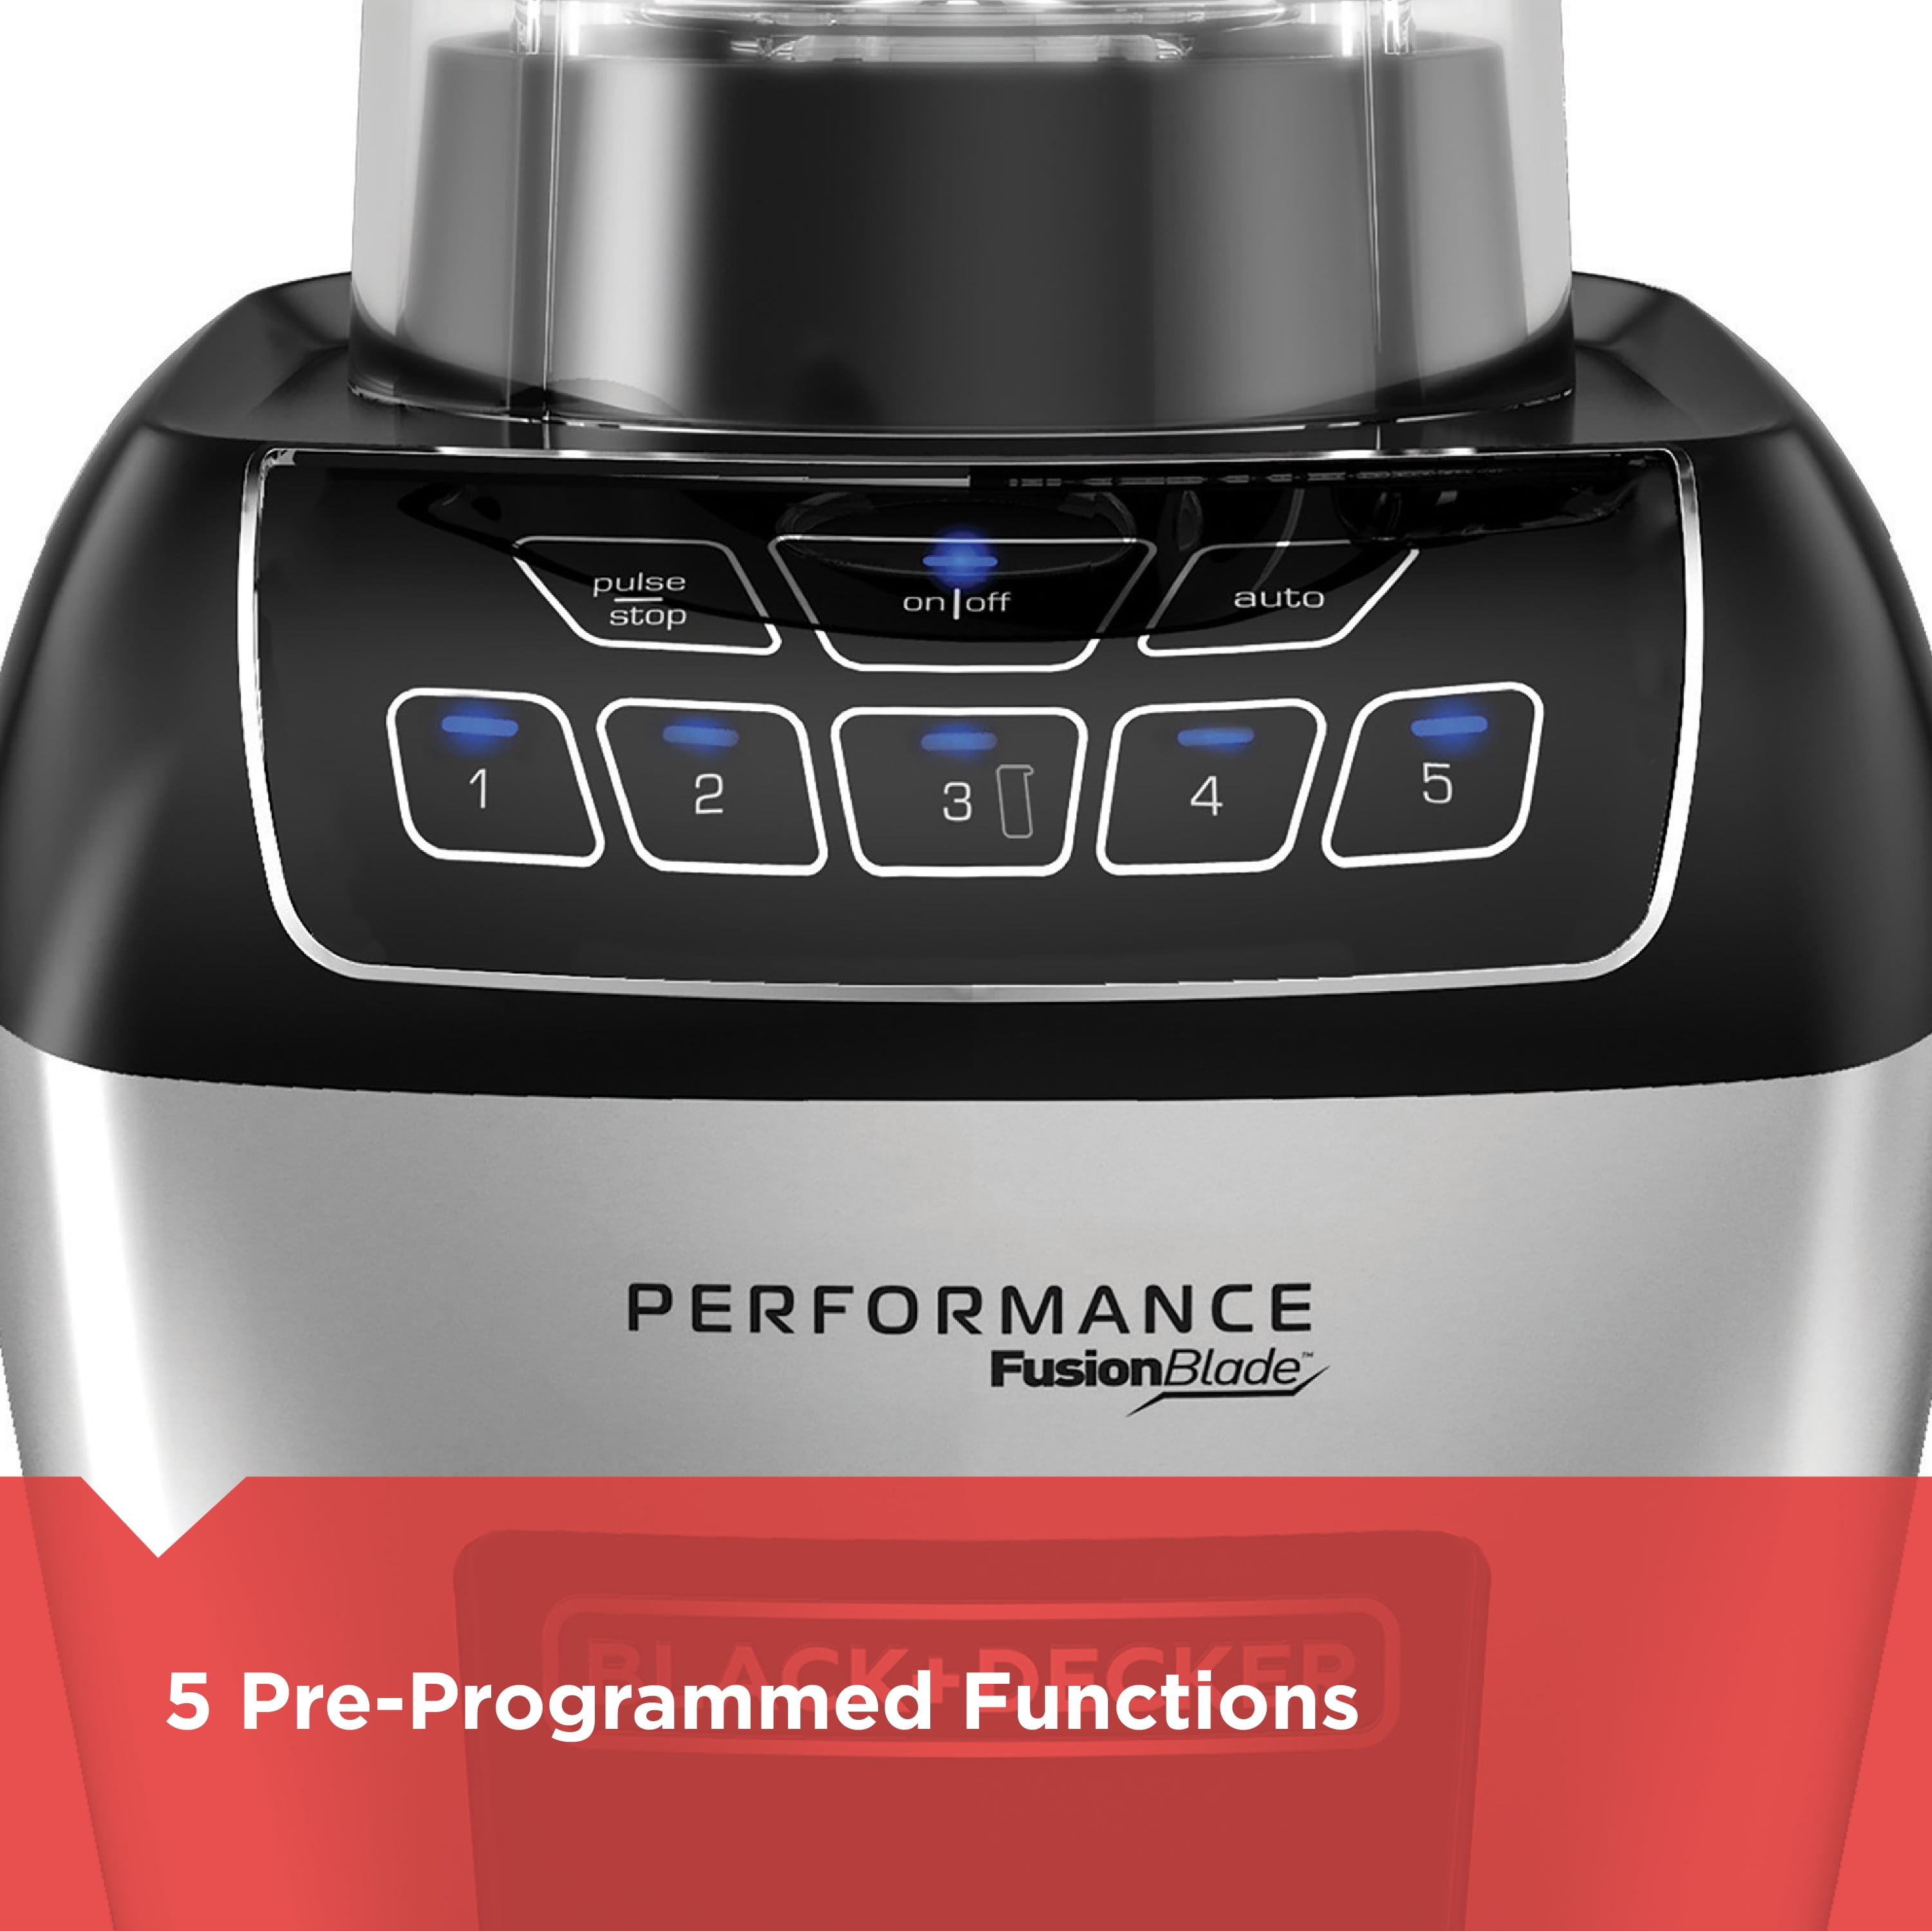 BLACK+DECKER FusionBlade Performance Digital Blending System with  Adjustable Control, Black/Silver, BL6005 